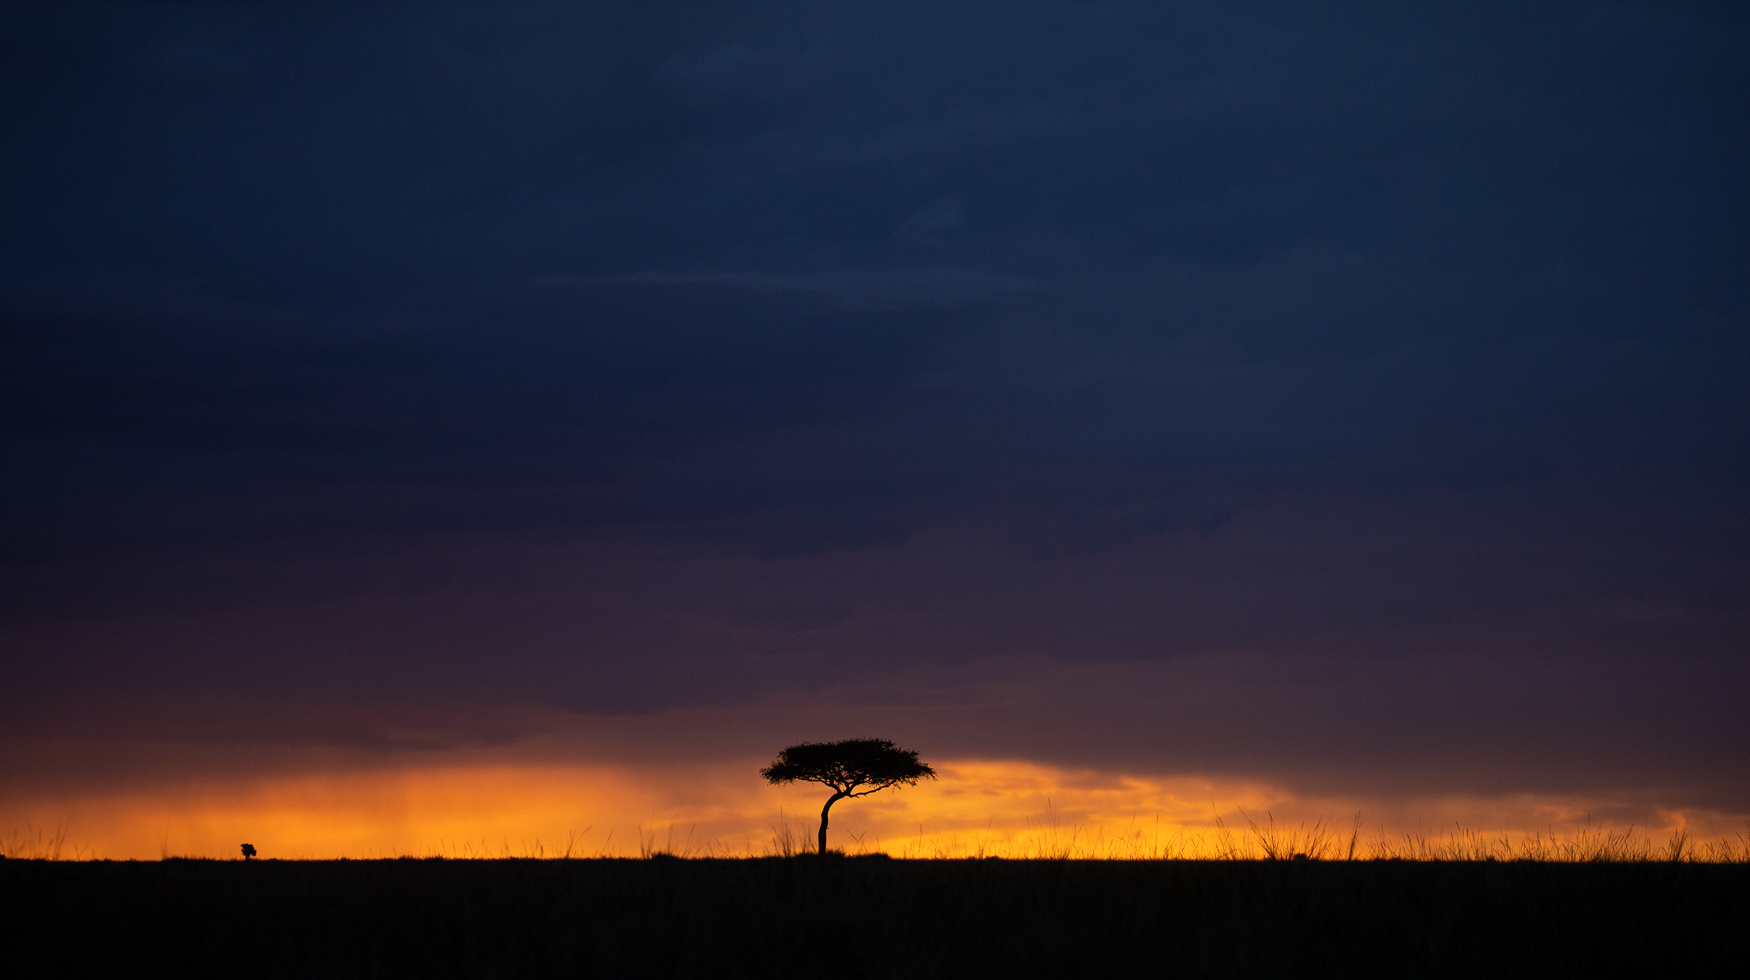 The Mara Triangle single tree sunset